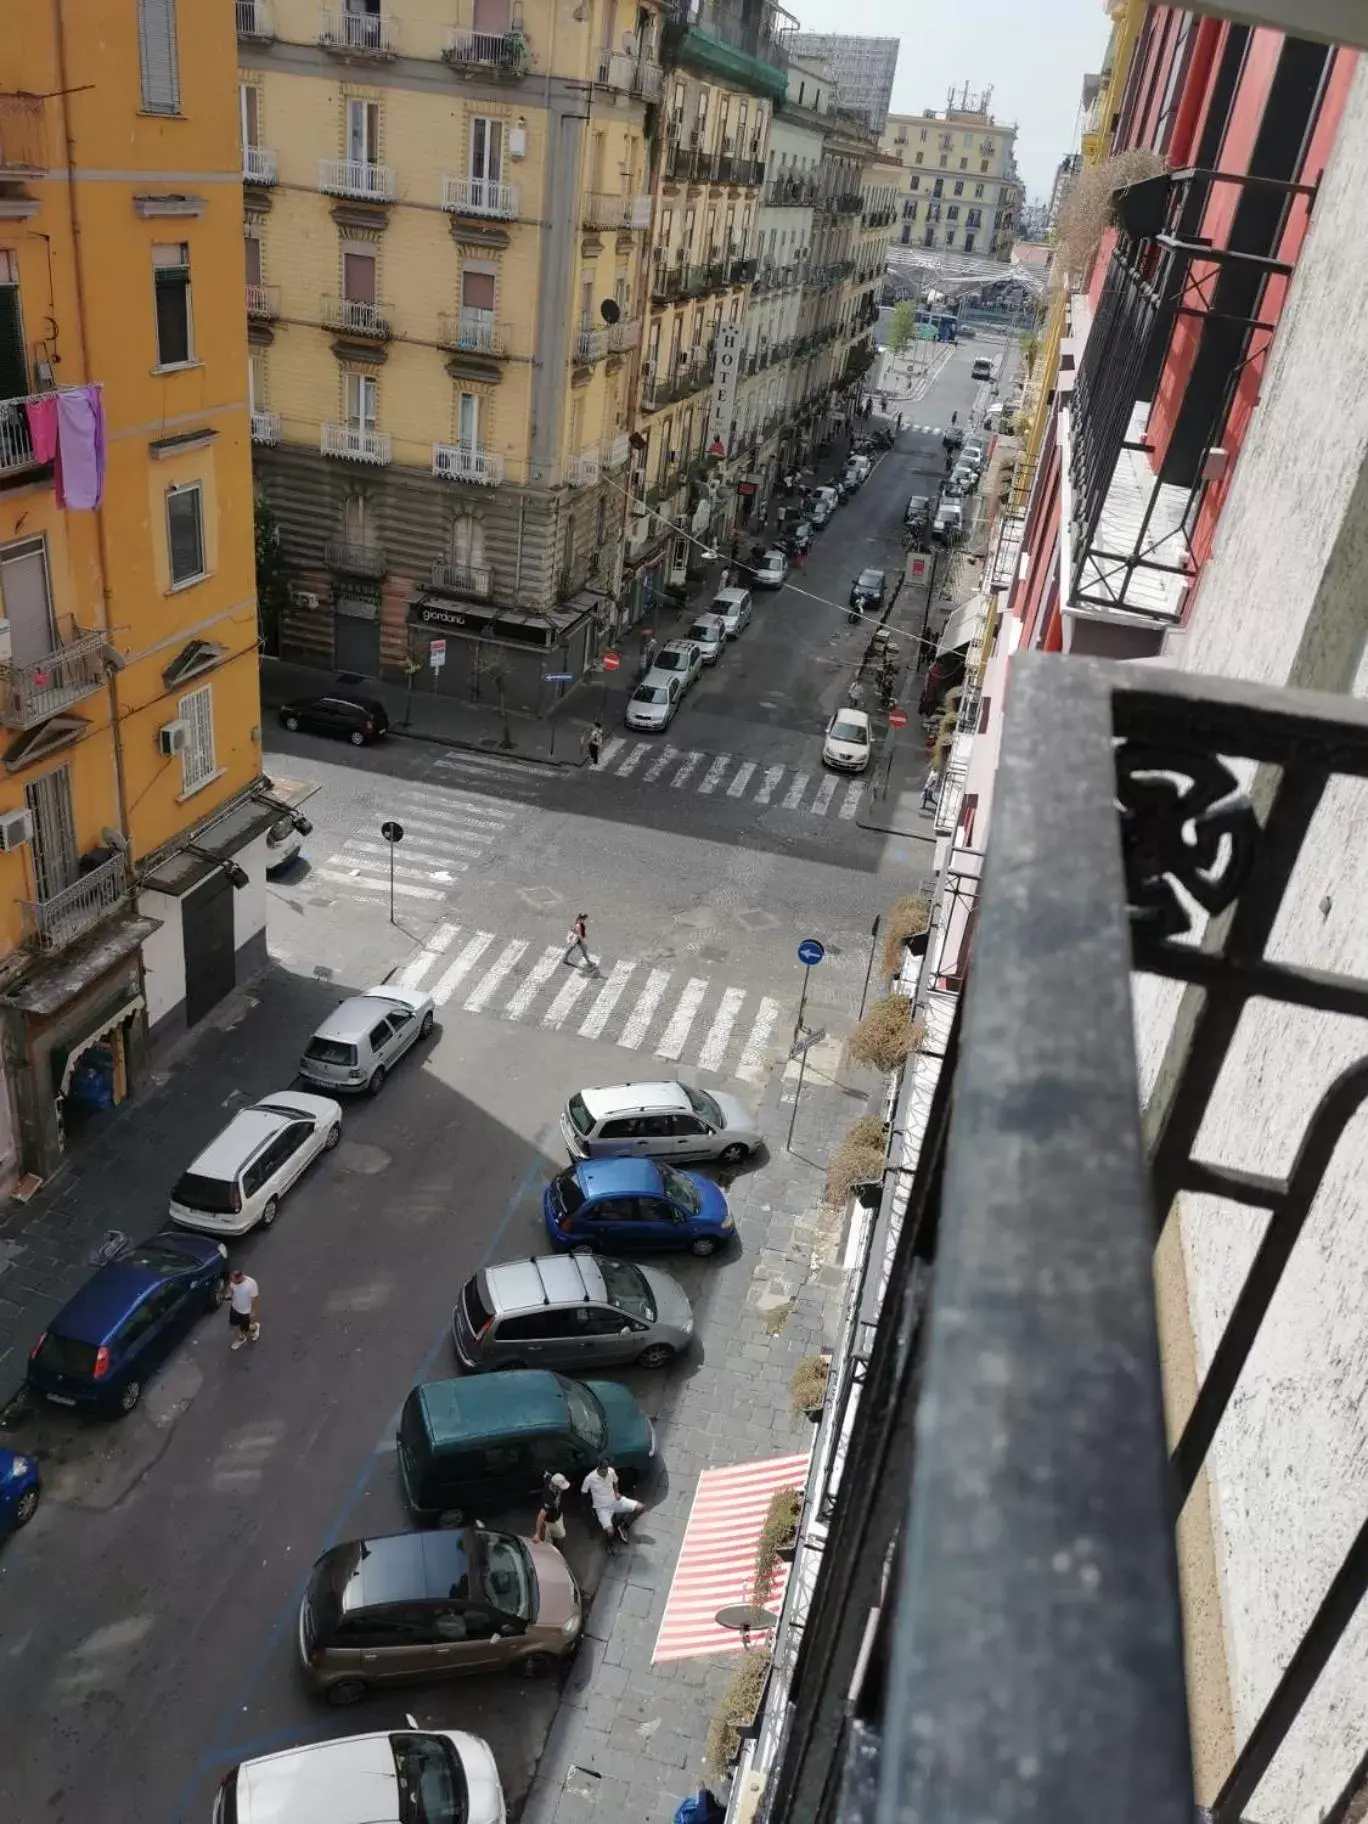 Neighbourhood, City View in A I R NaCasaBella Napoli